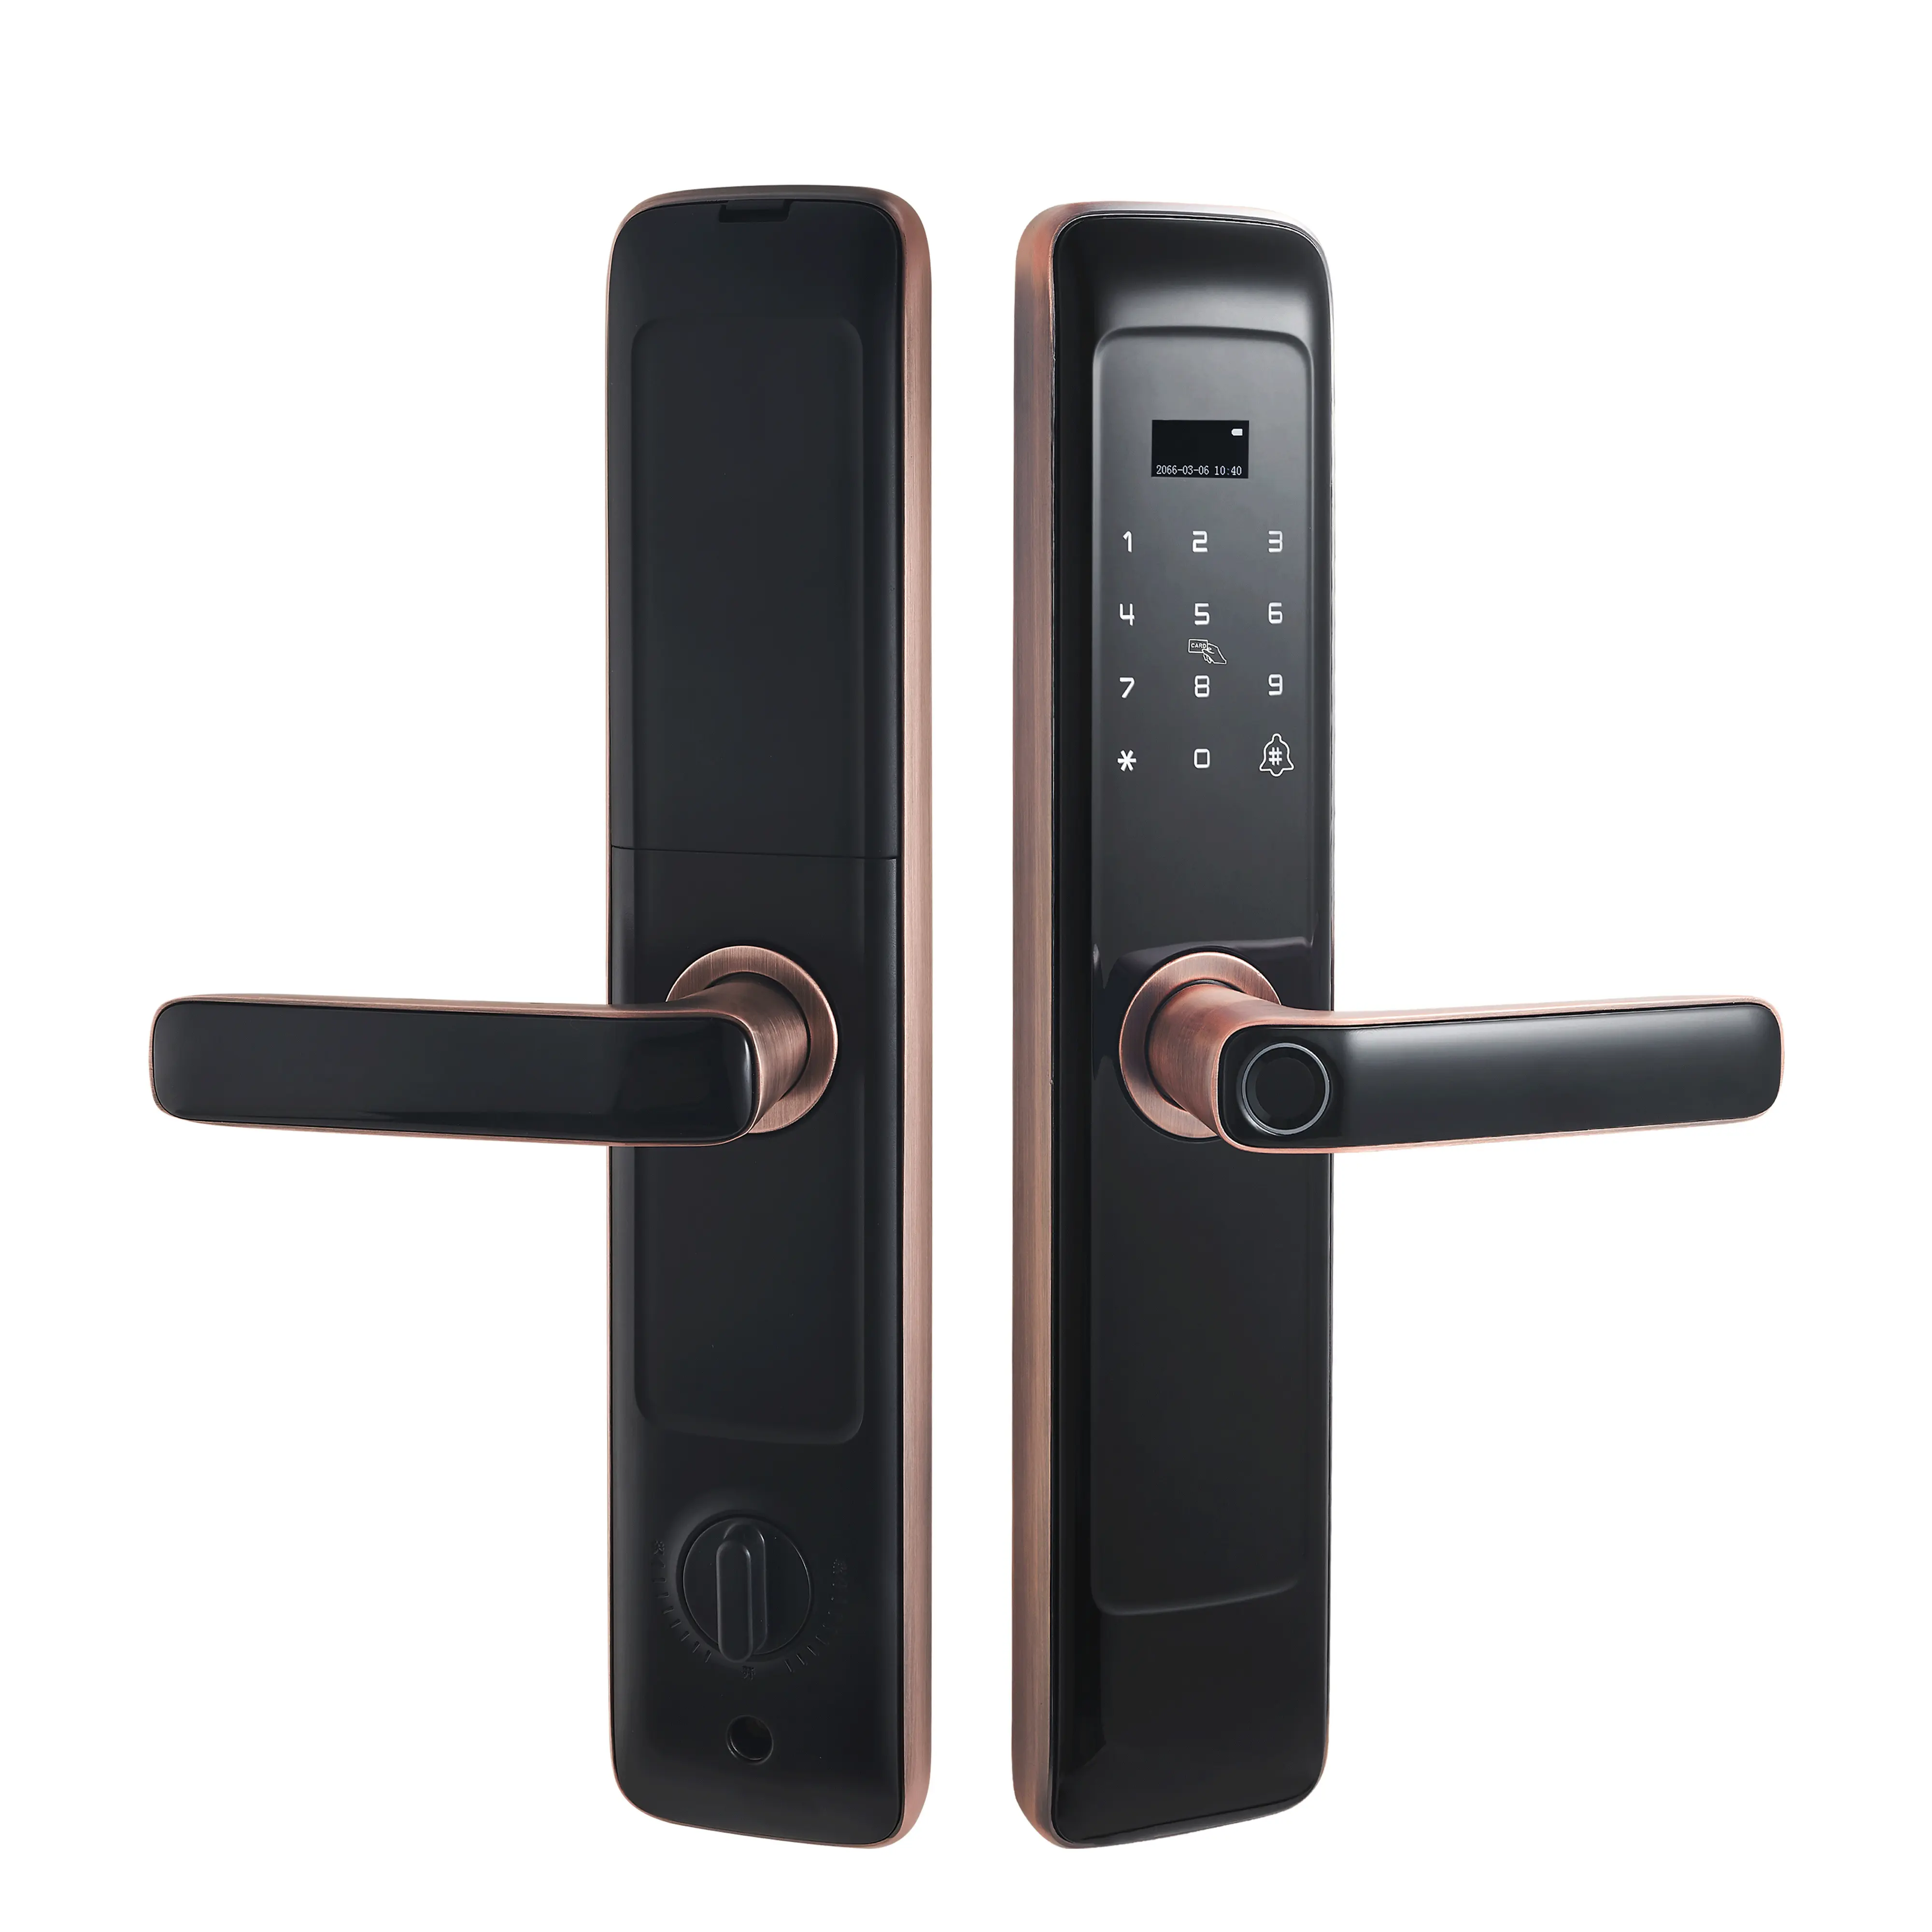 Smart Home Door Lock House Safty Waterproof Electronic Smart Lock Pull Push Smart Lock vendita superiore di buona qualità per affari